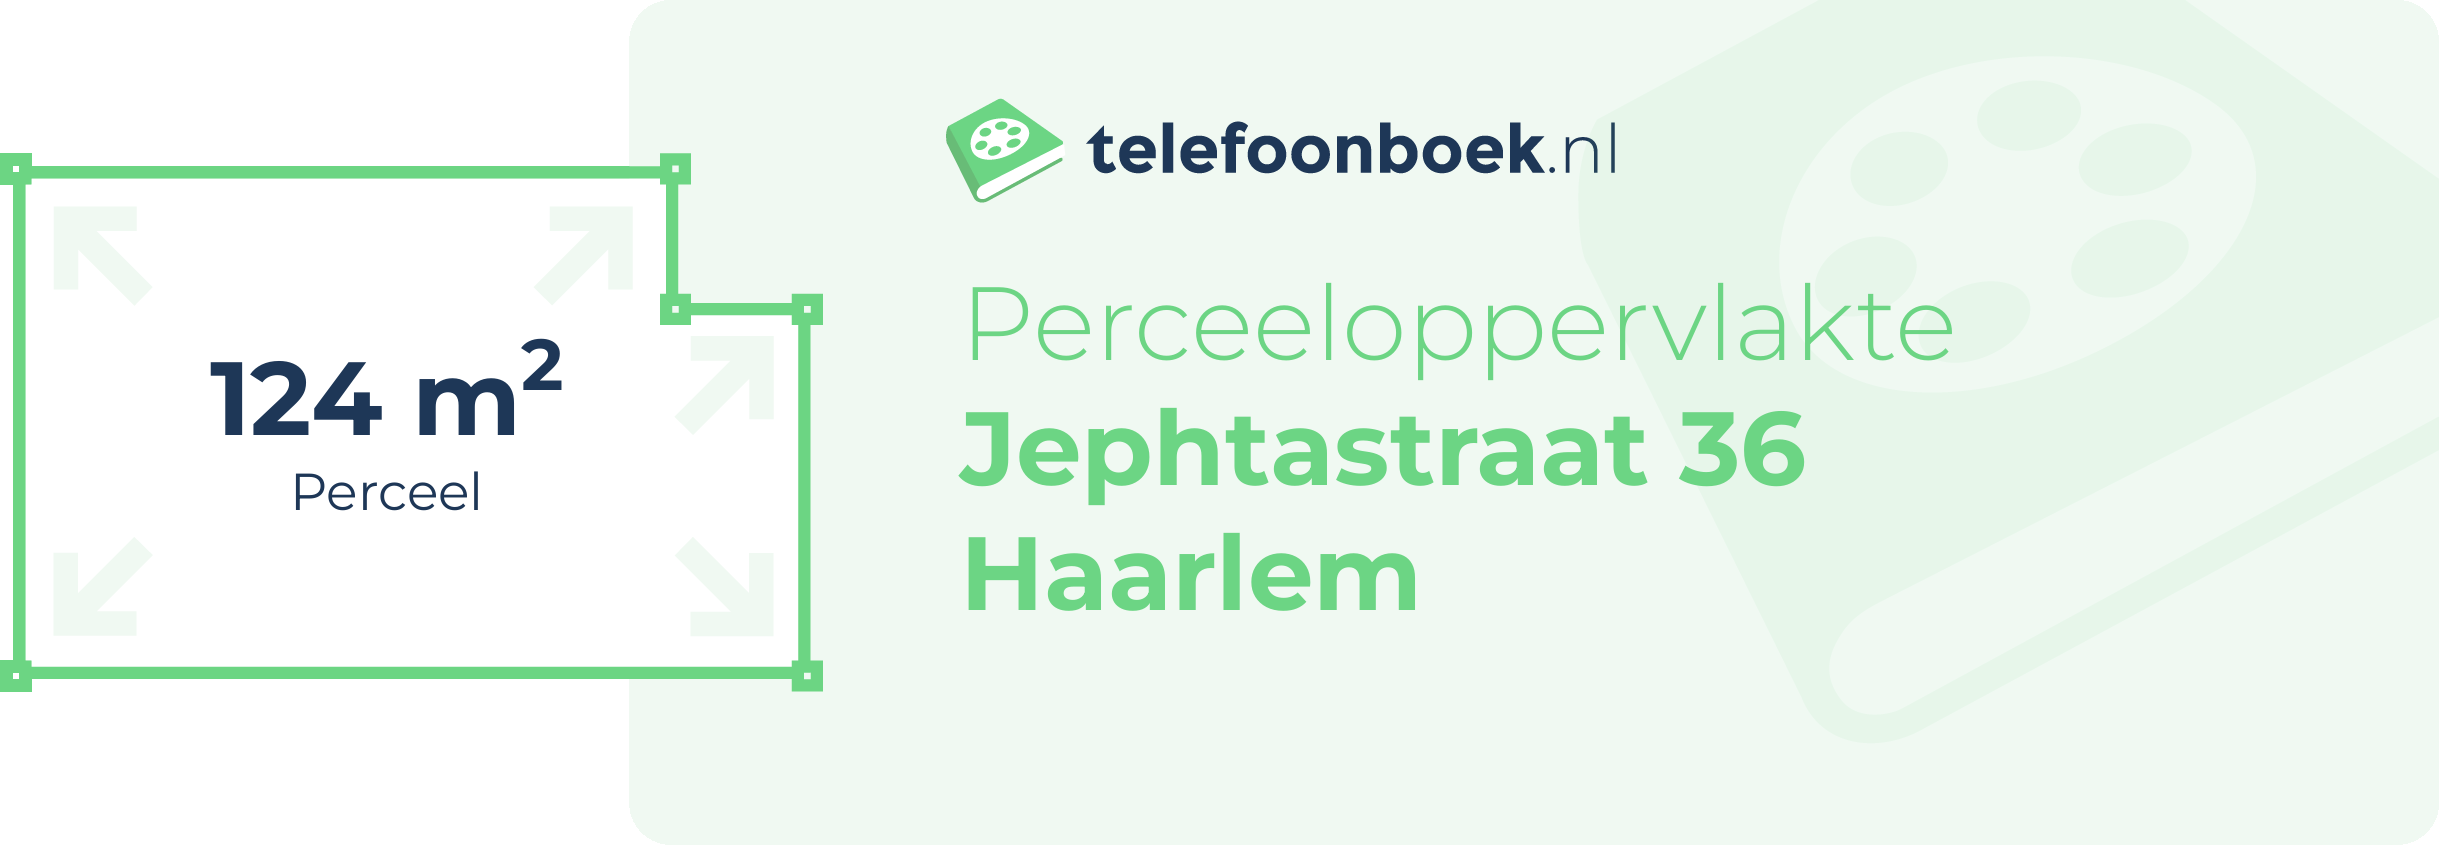 Perceeloppervlakte Jephtastraat 36 Haarlem